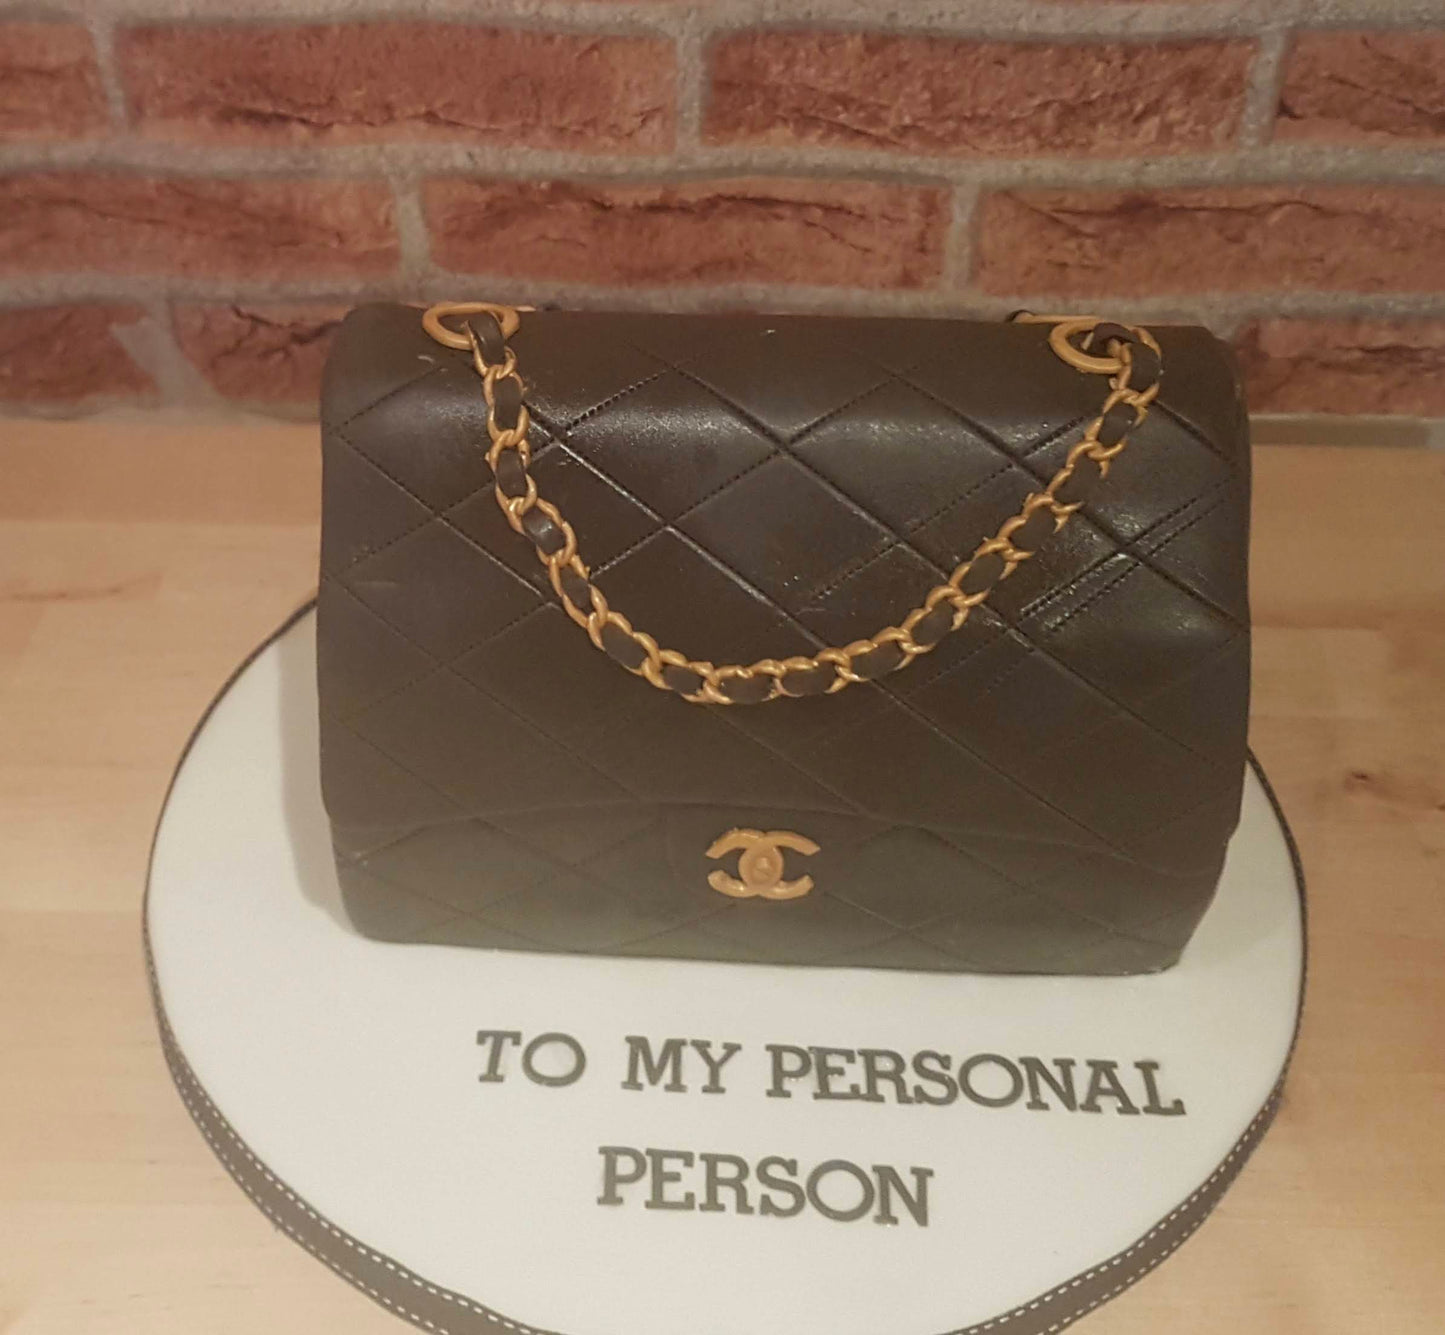 Black Chanel bag cake